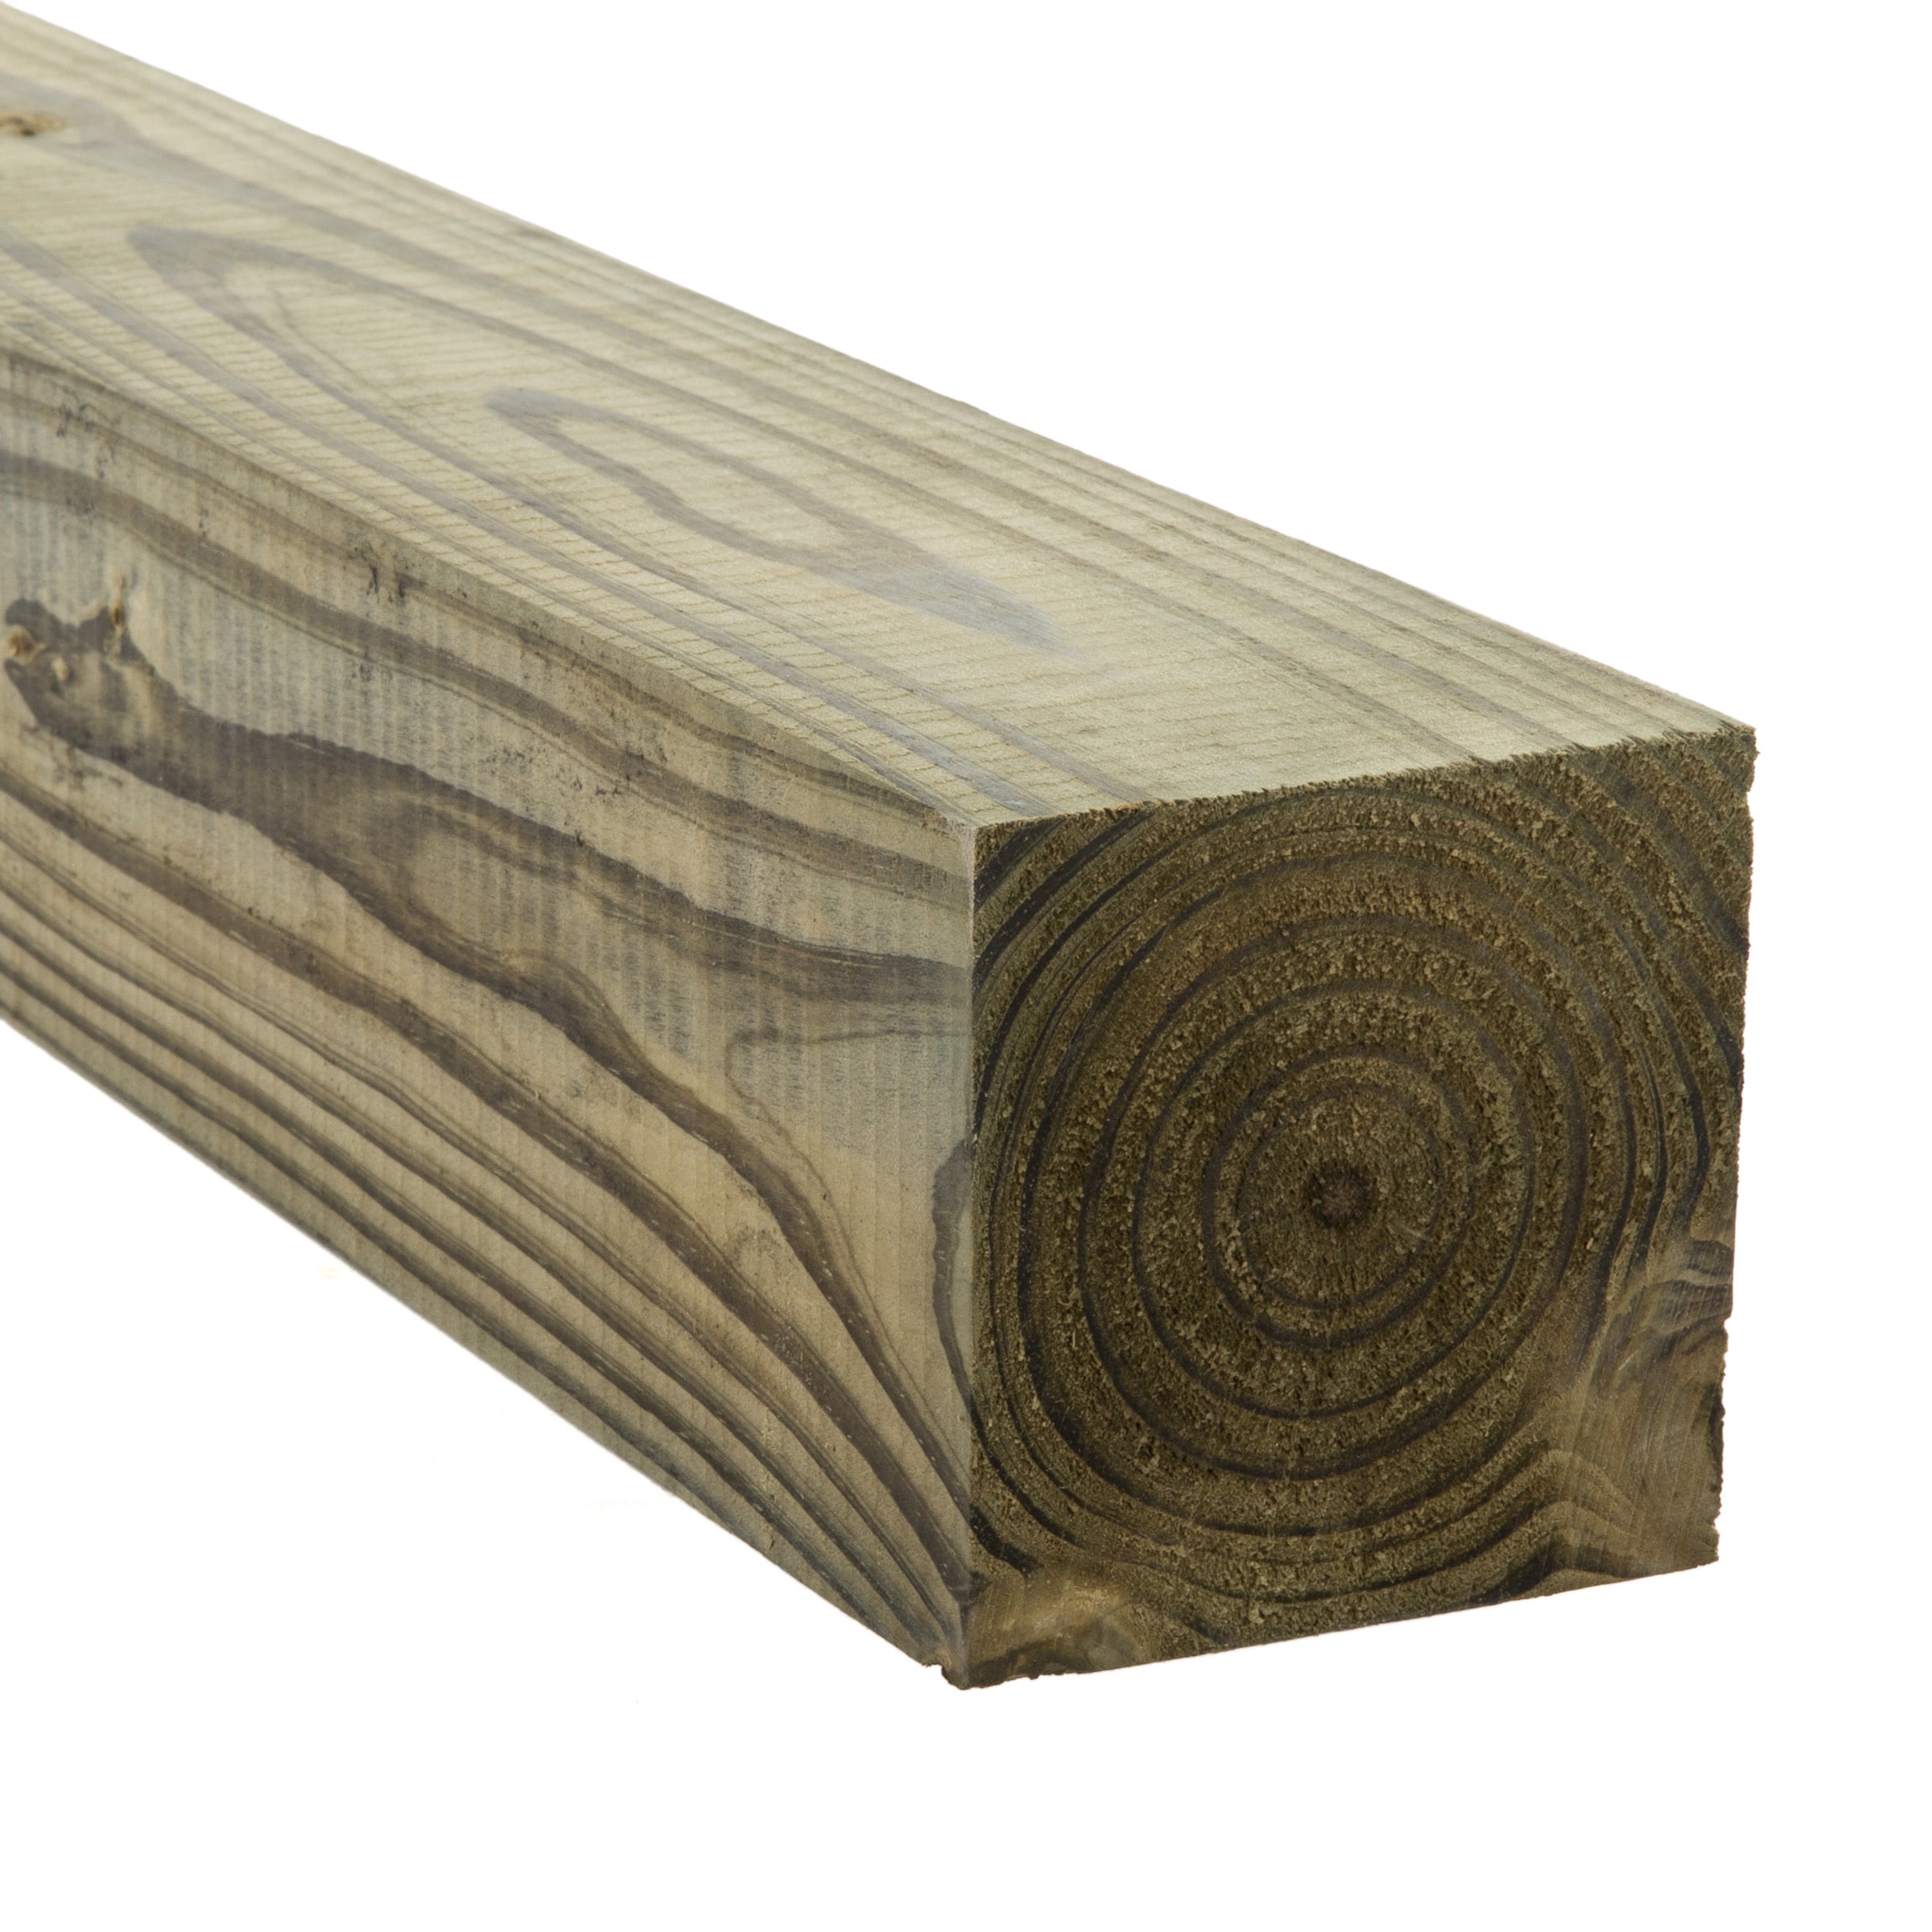 Severe Weather 2-in x 4-in x 8-ft Hem Fir Pressure Treated Lumber